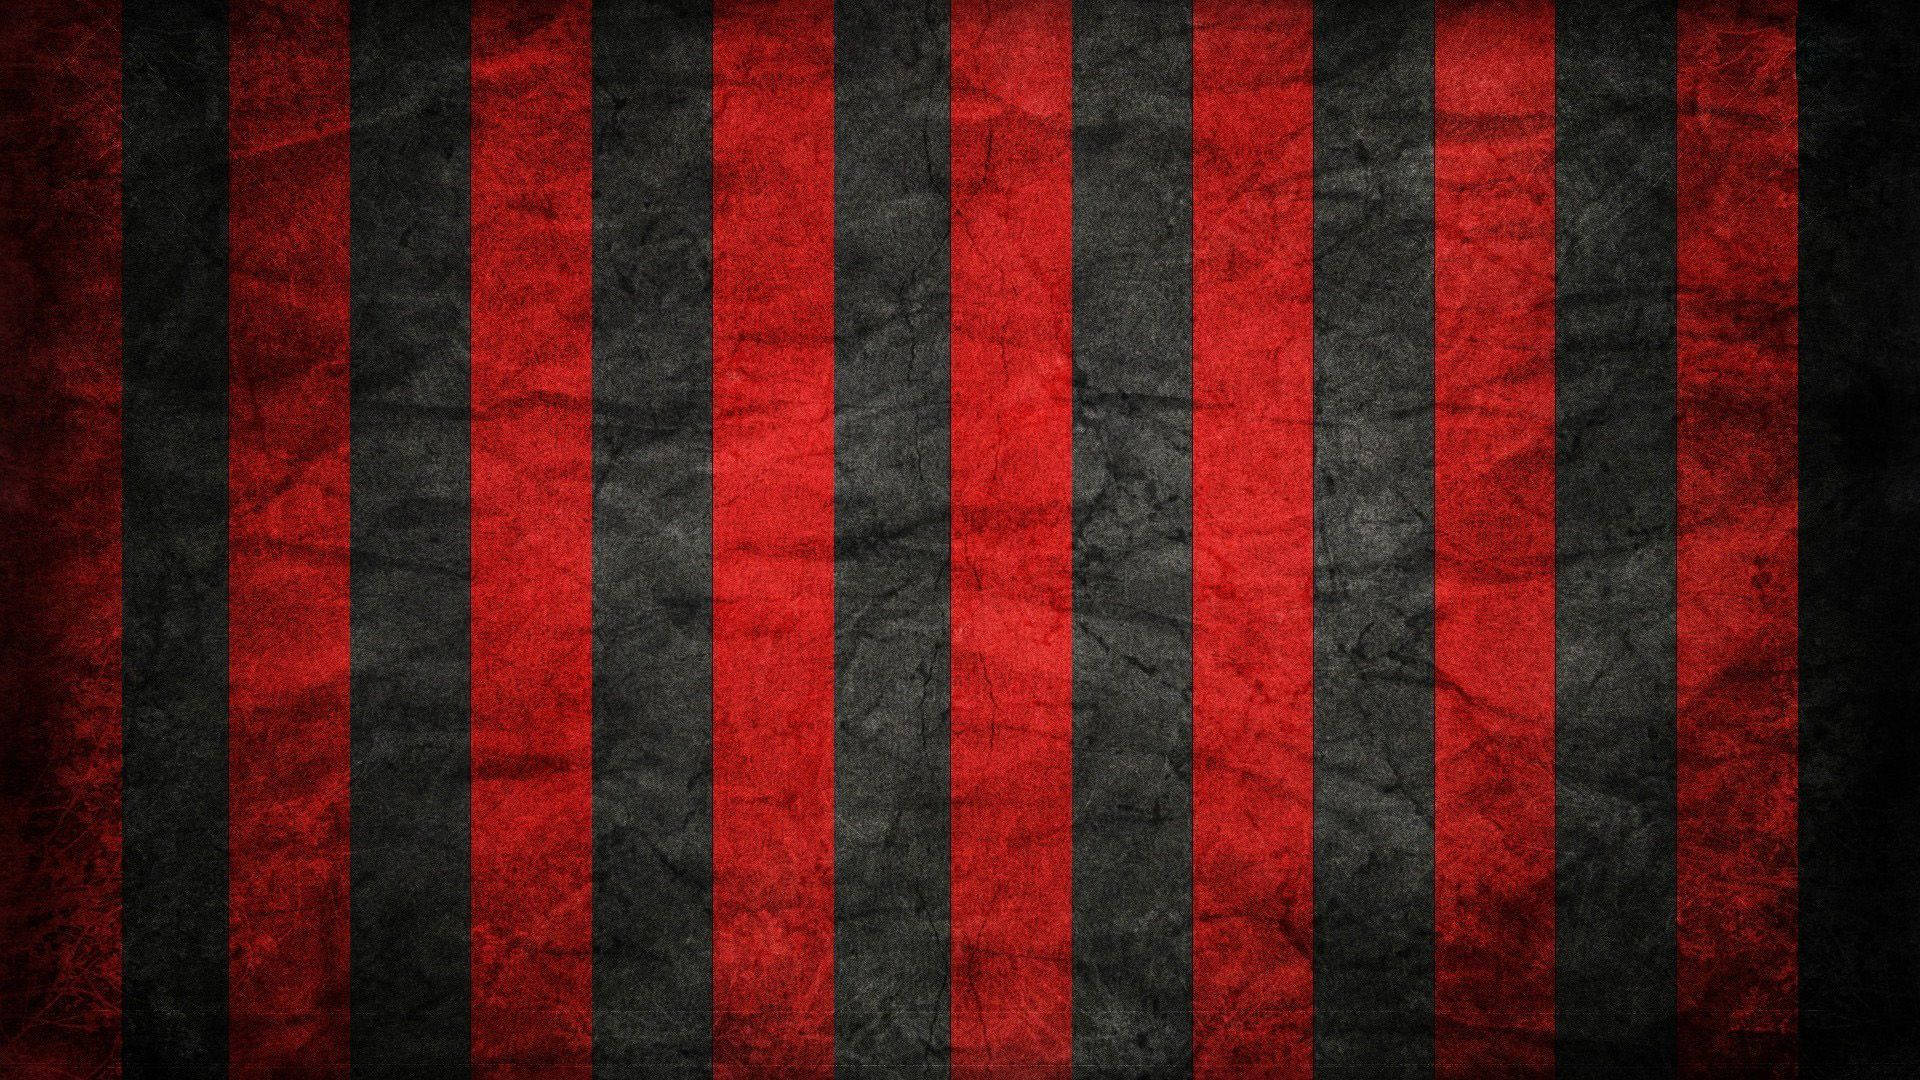 Cool Red Stripes On Black